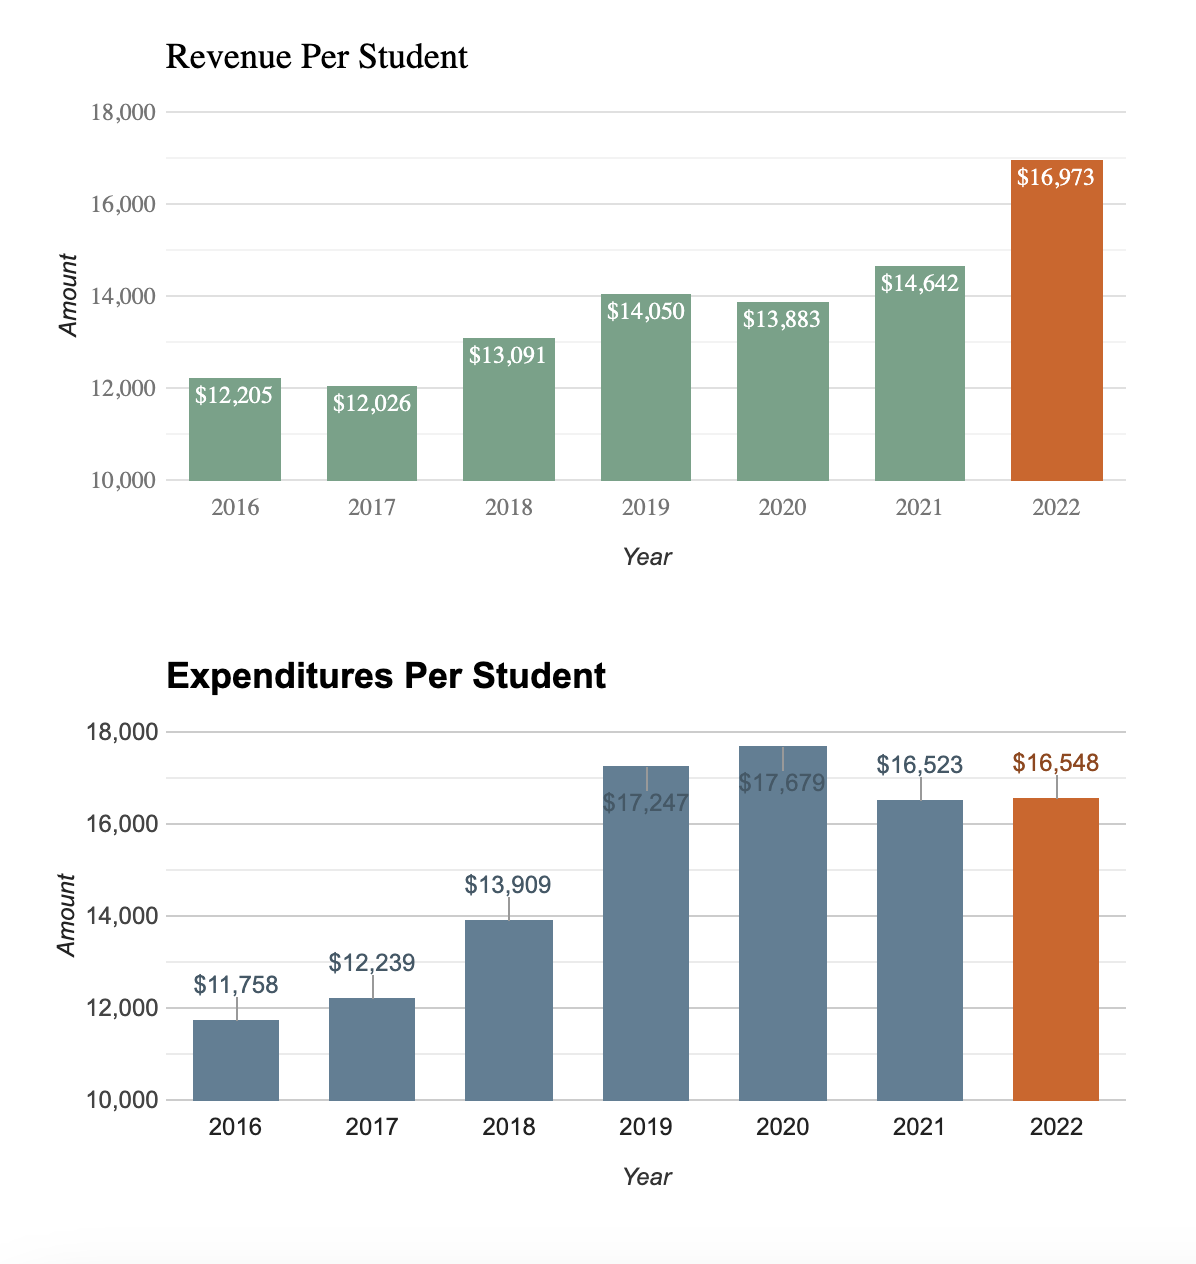 Revenue per student and expenditures per student